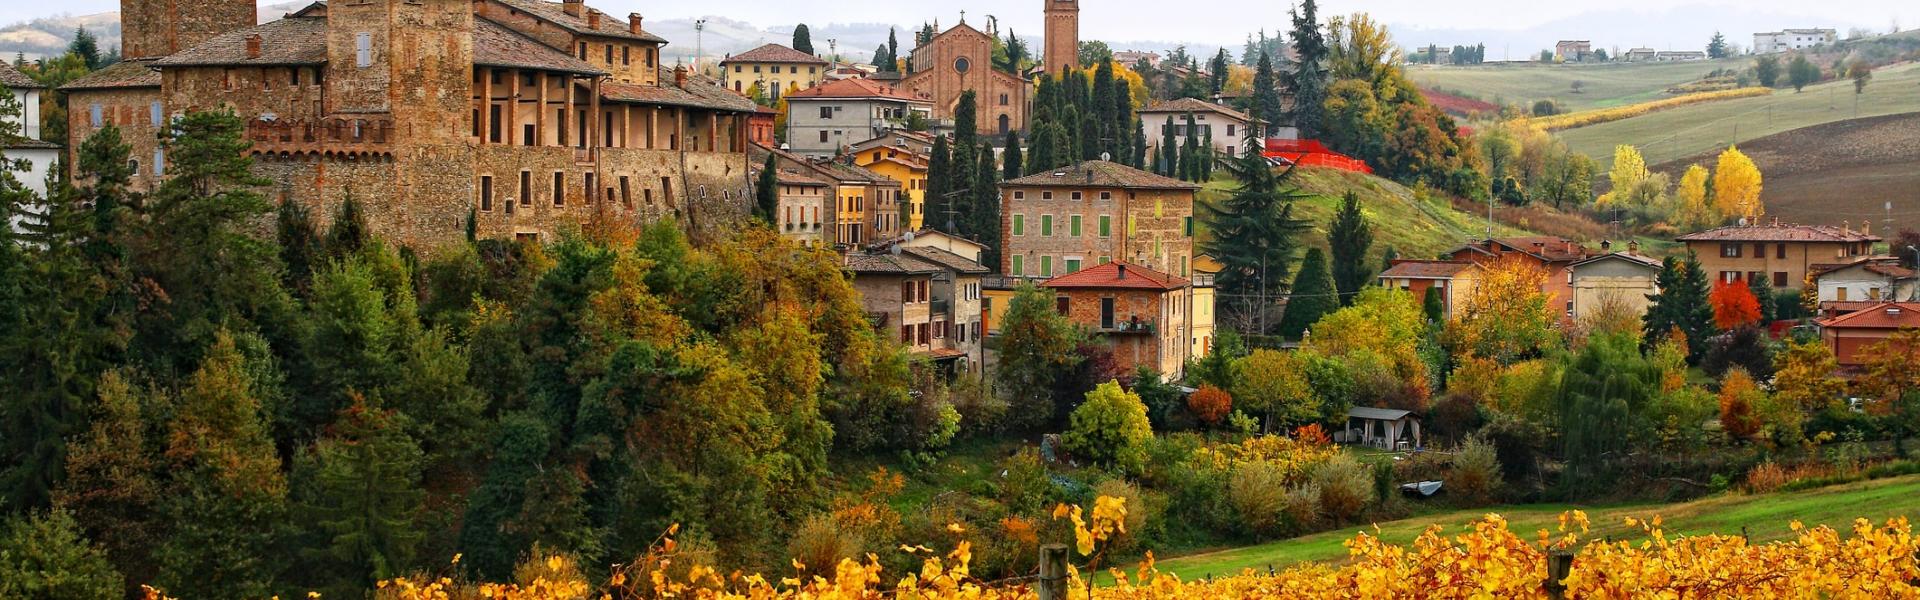 Vakantiehuizen en appartementen in Emilia-Romagna - Wimdu